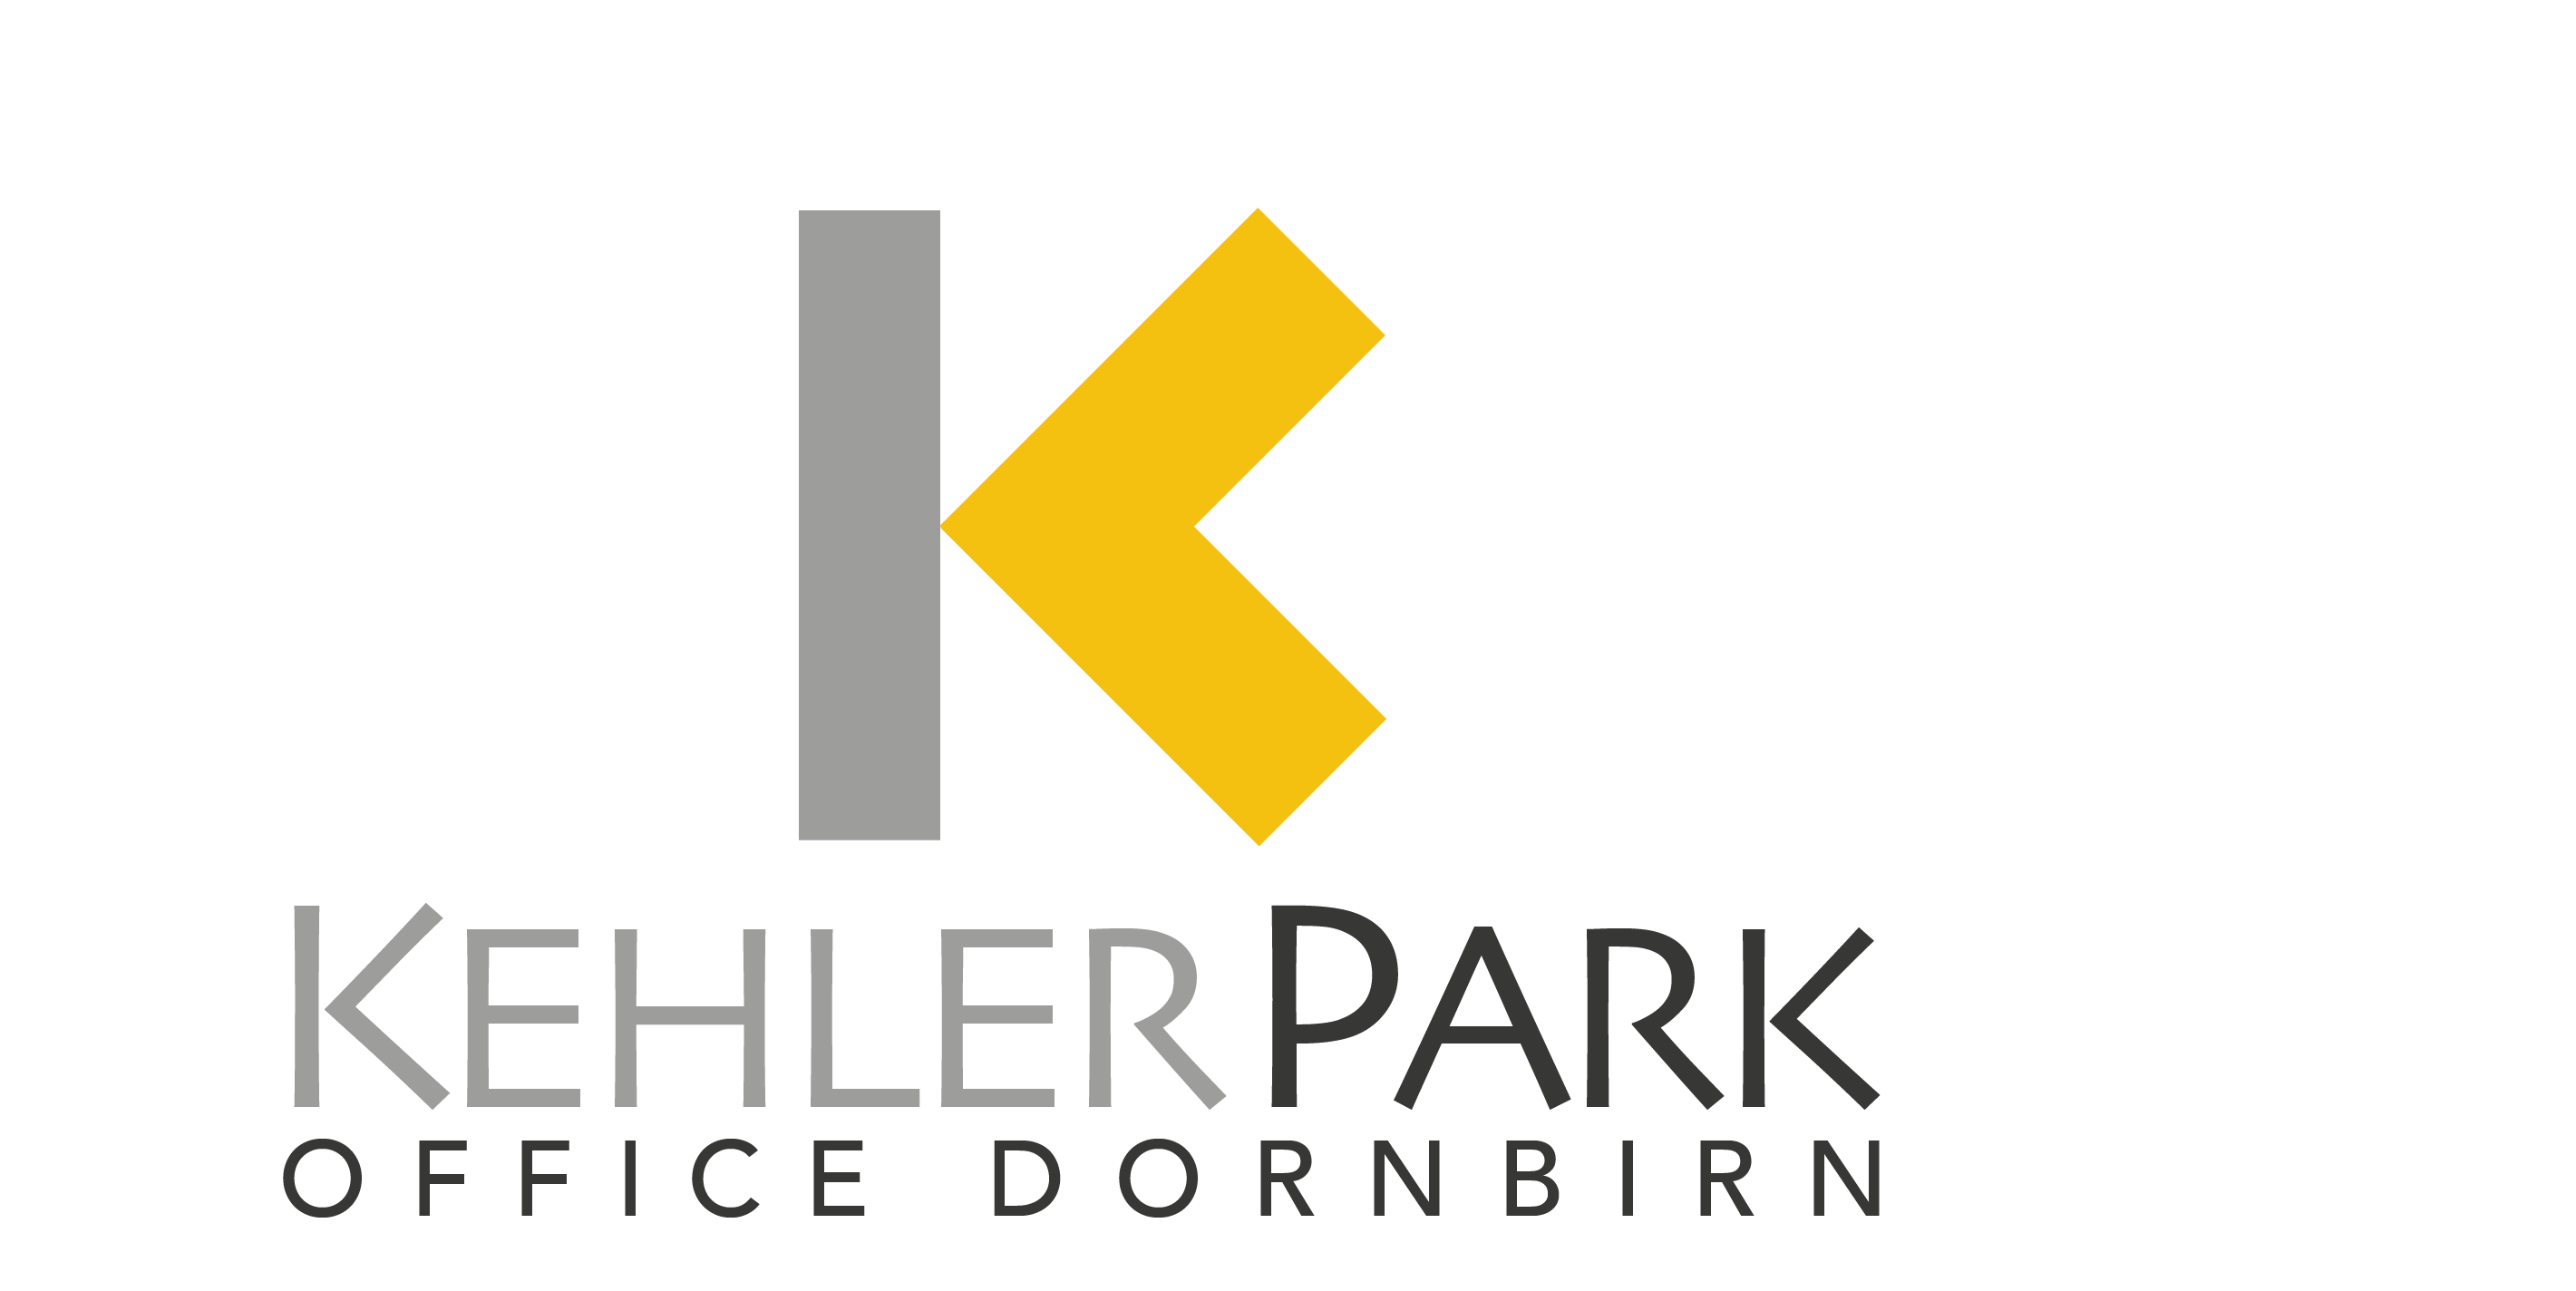 Kehlerpark Office Dornbirn